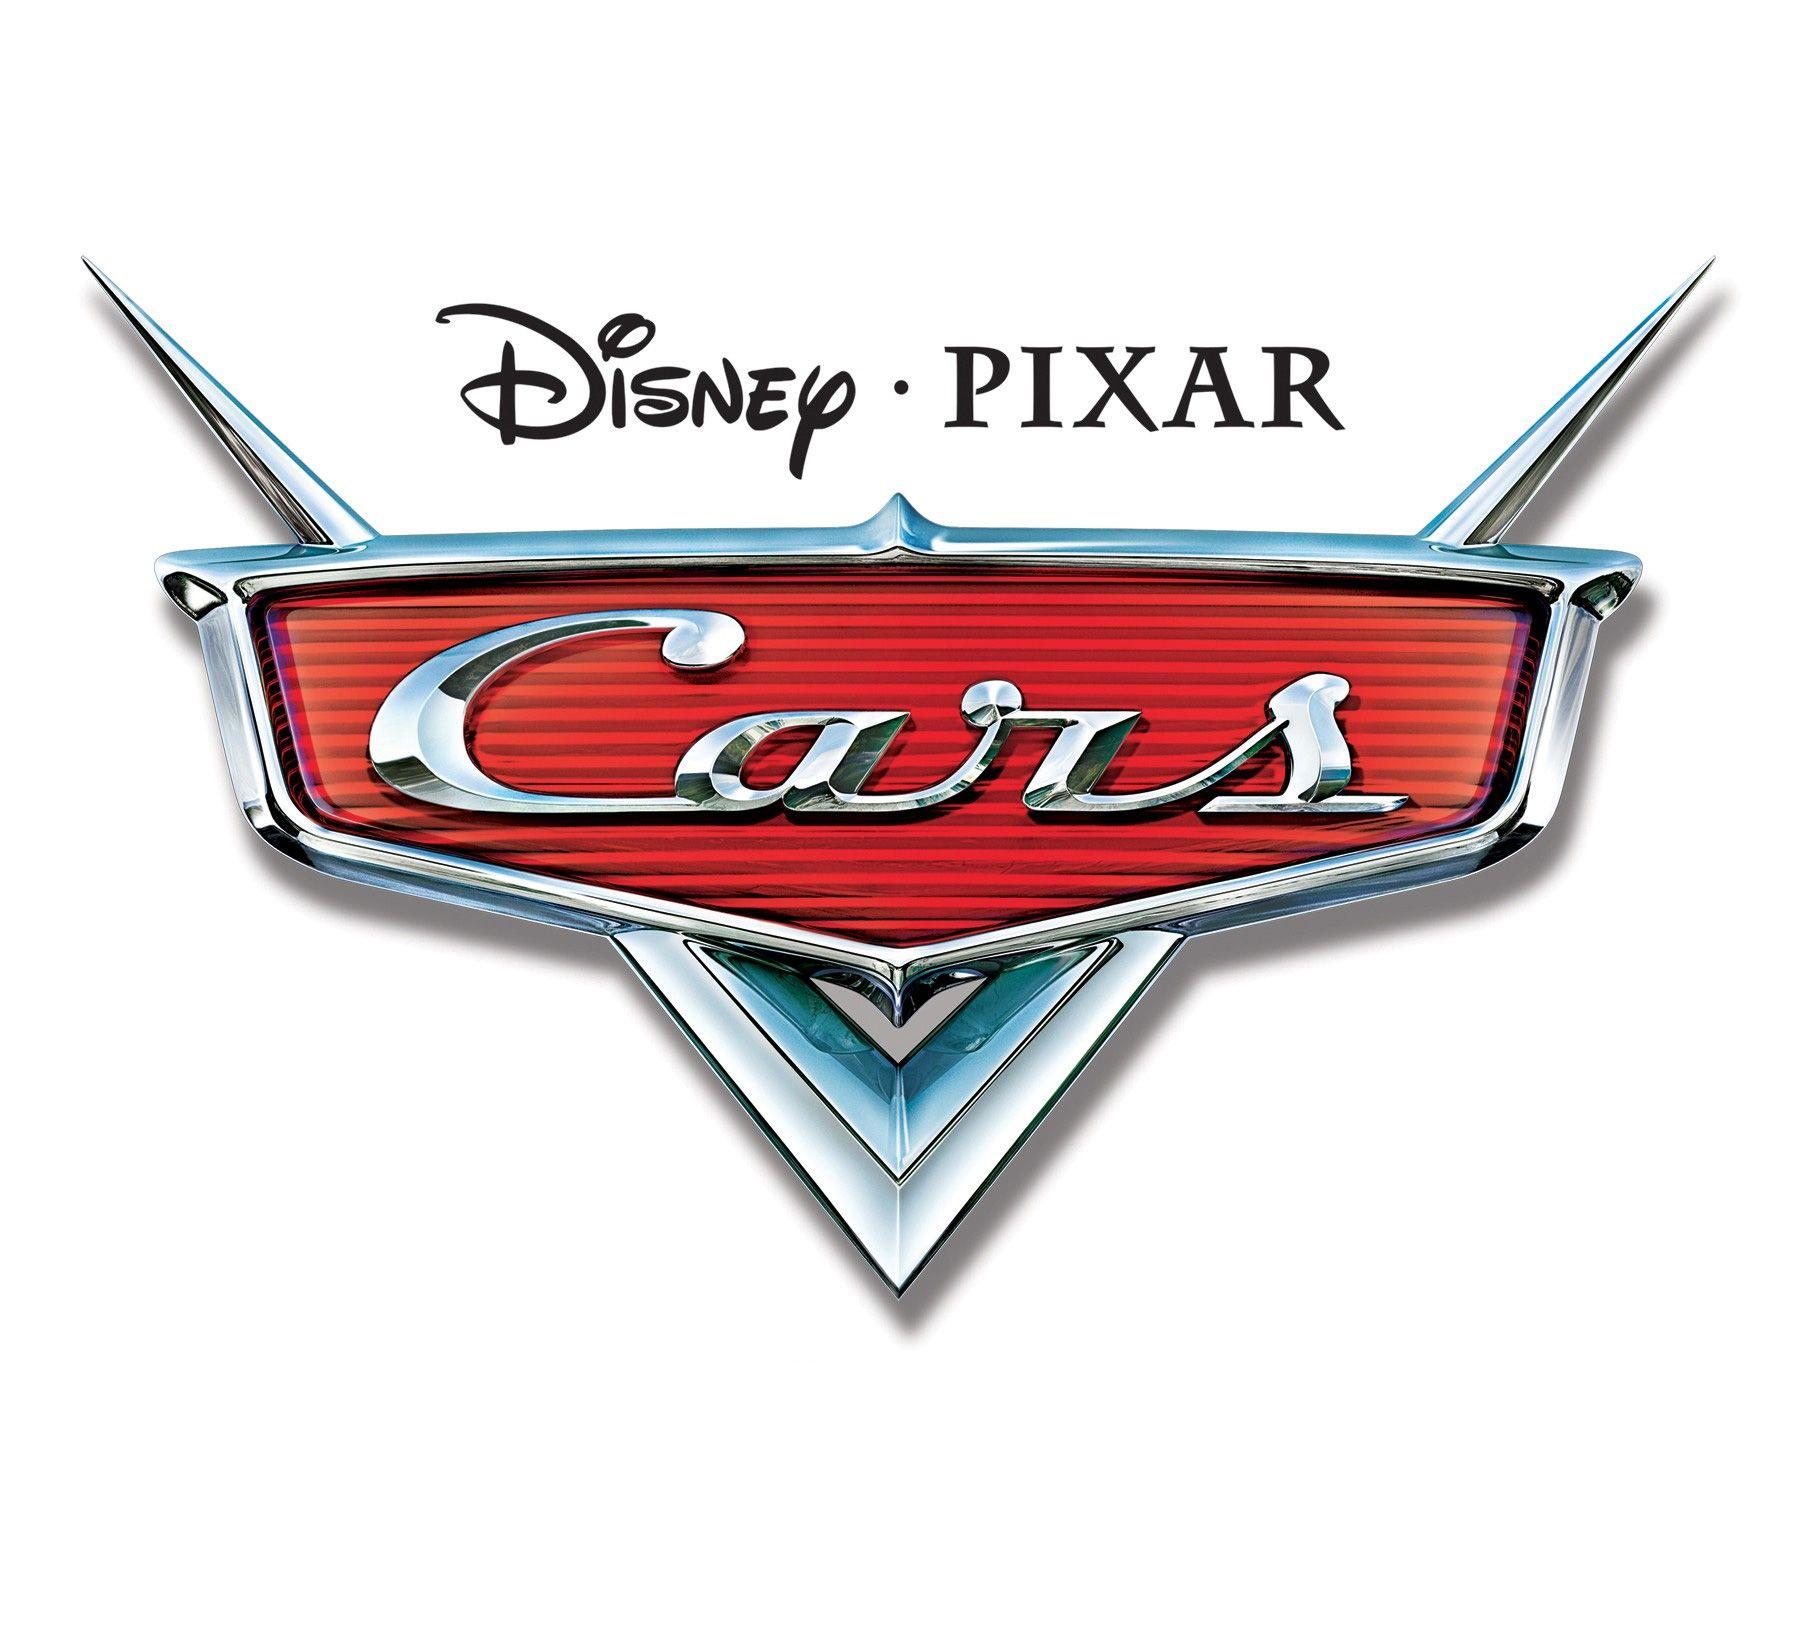 Disney Pixar Films Logo - Cars (2006 film) logo - Fonts In Use